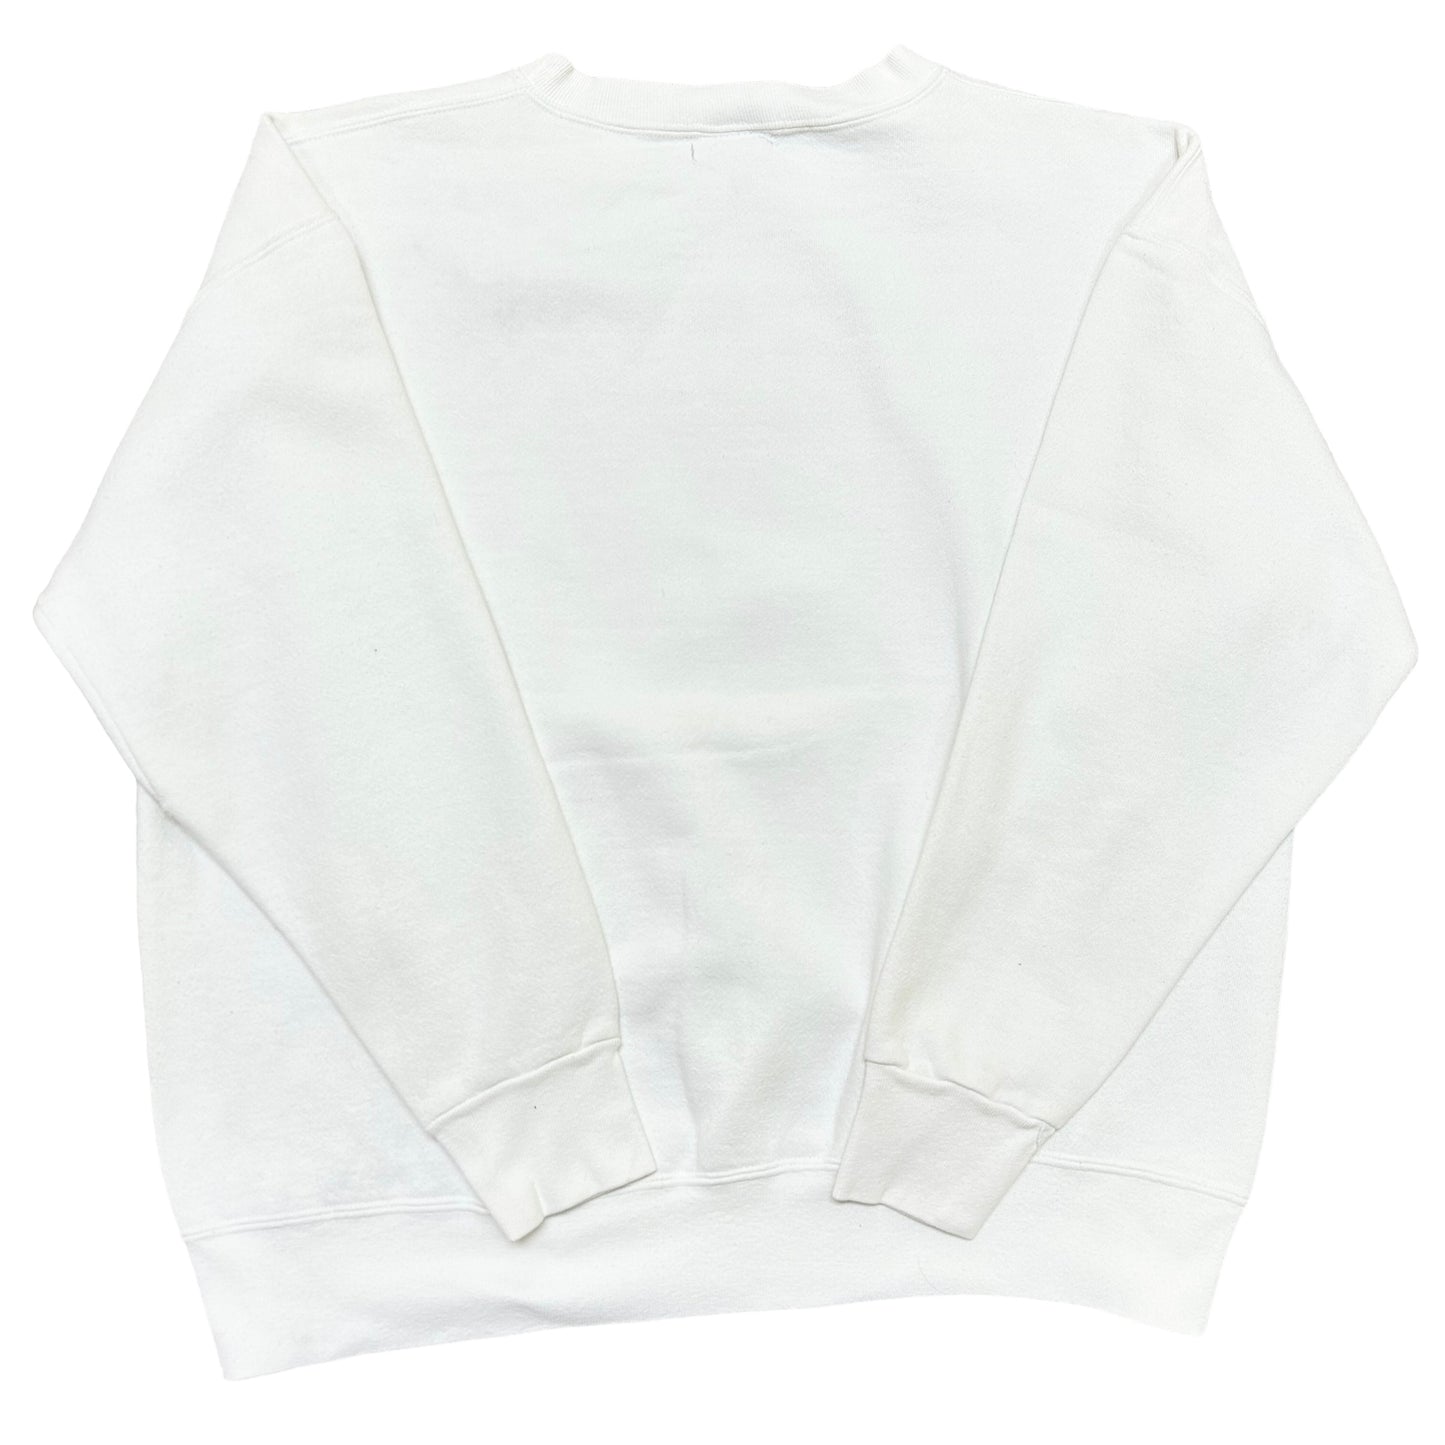 Vintage 1990s Latham’s Tavern Cambridge, England White Crewneck Sweatshirt - Size XL (Fits Large)